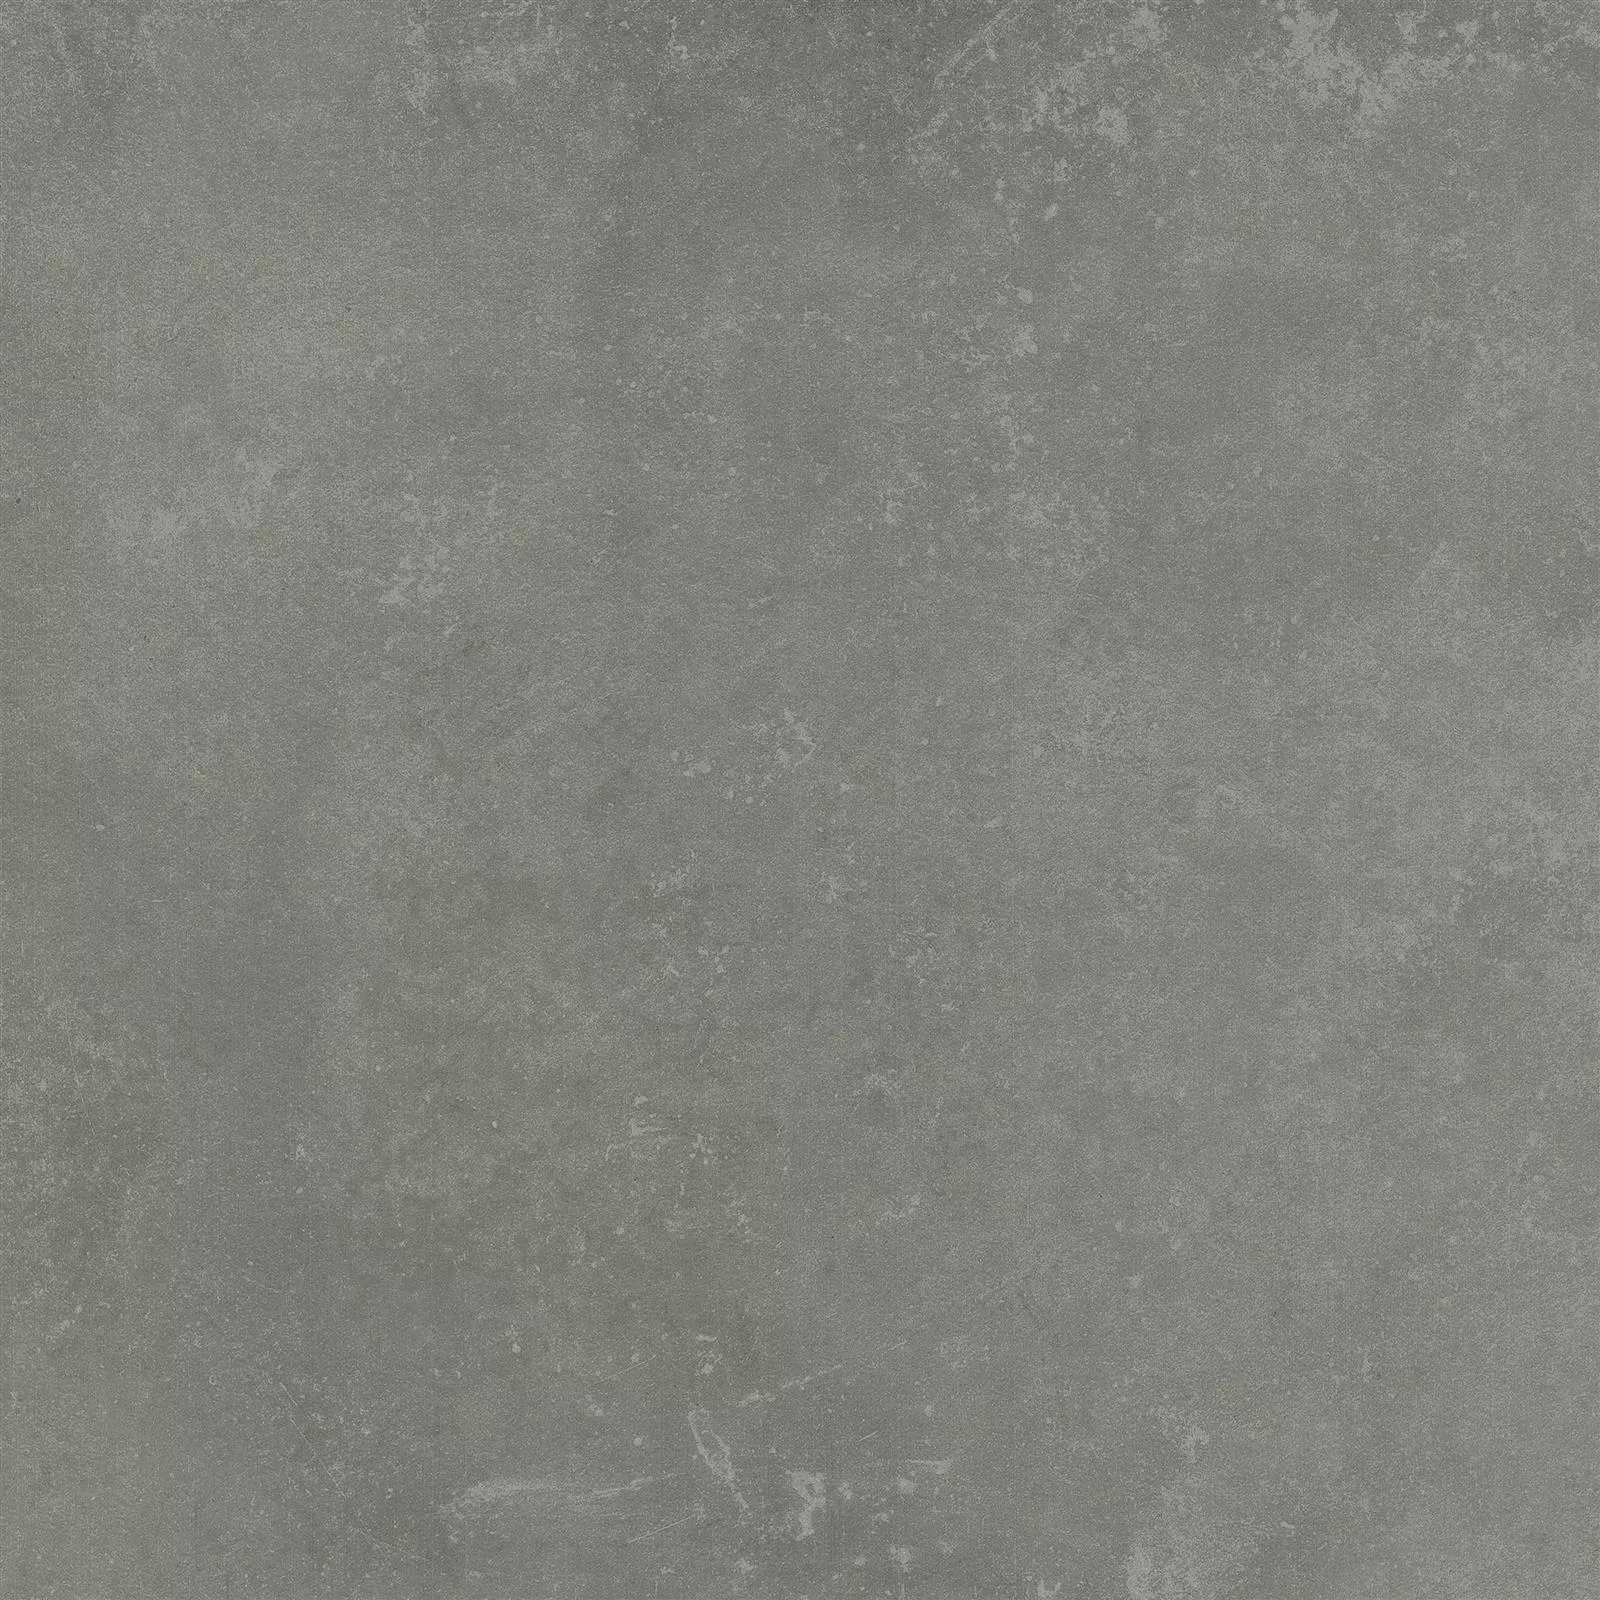 Sample Vloertegels Cement Optic Nepal Slim Grijs Beige 100x100cm